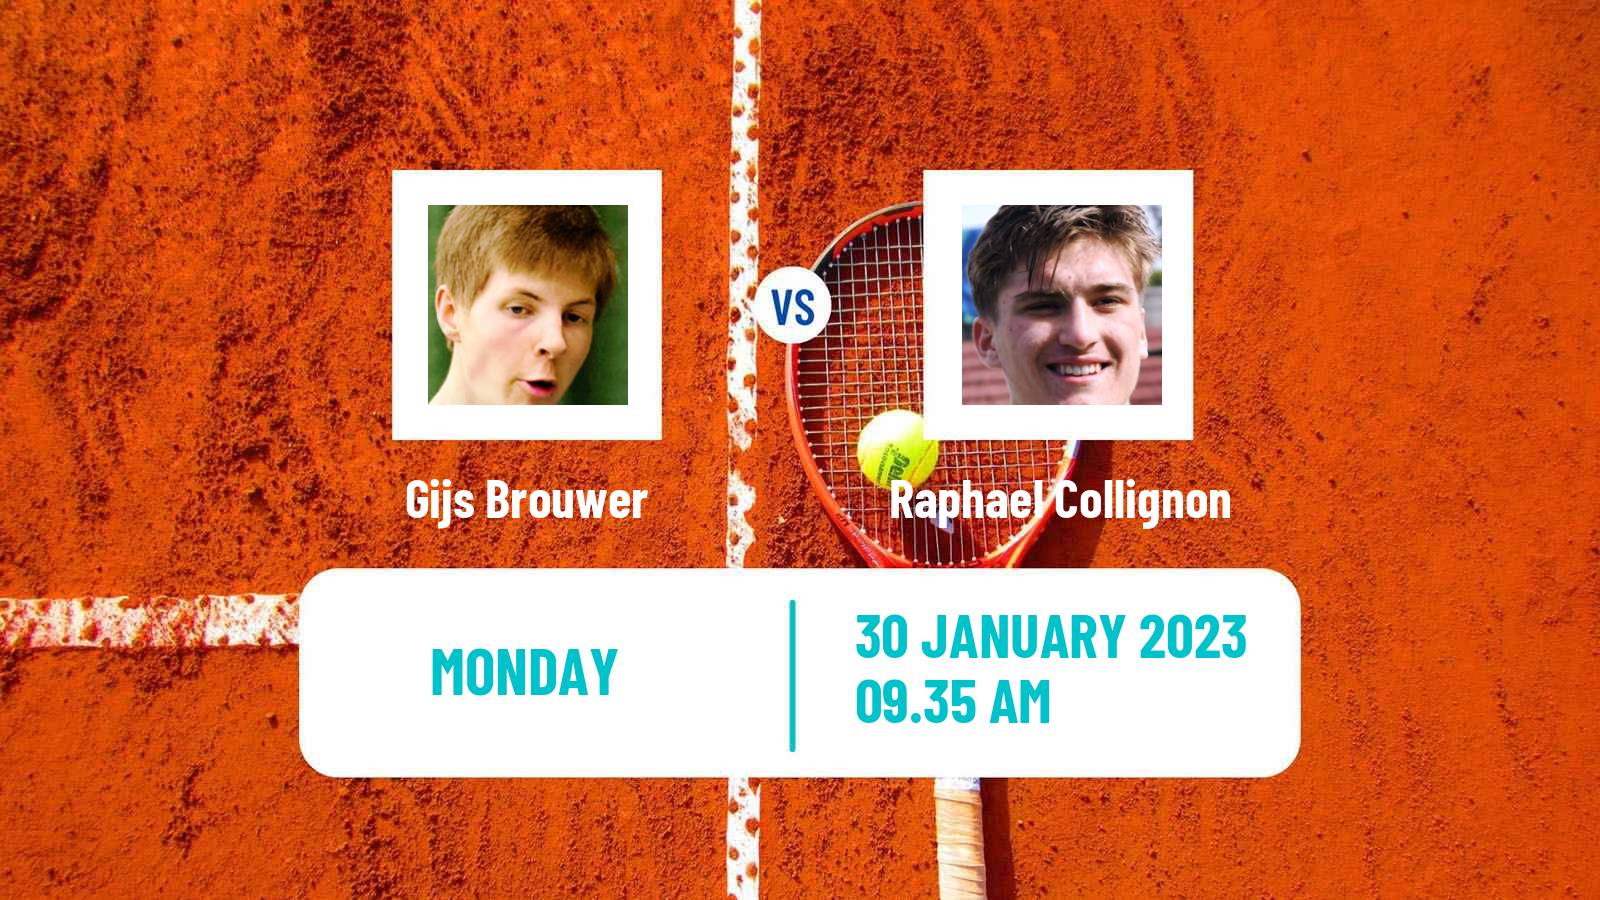 Tennis ATP Challenger Gijs Brouwer - Raphael Collignon